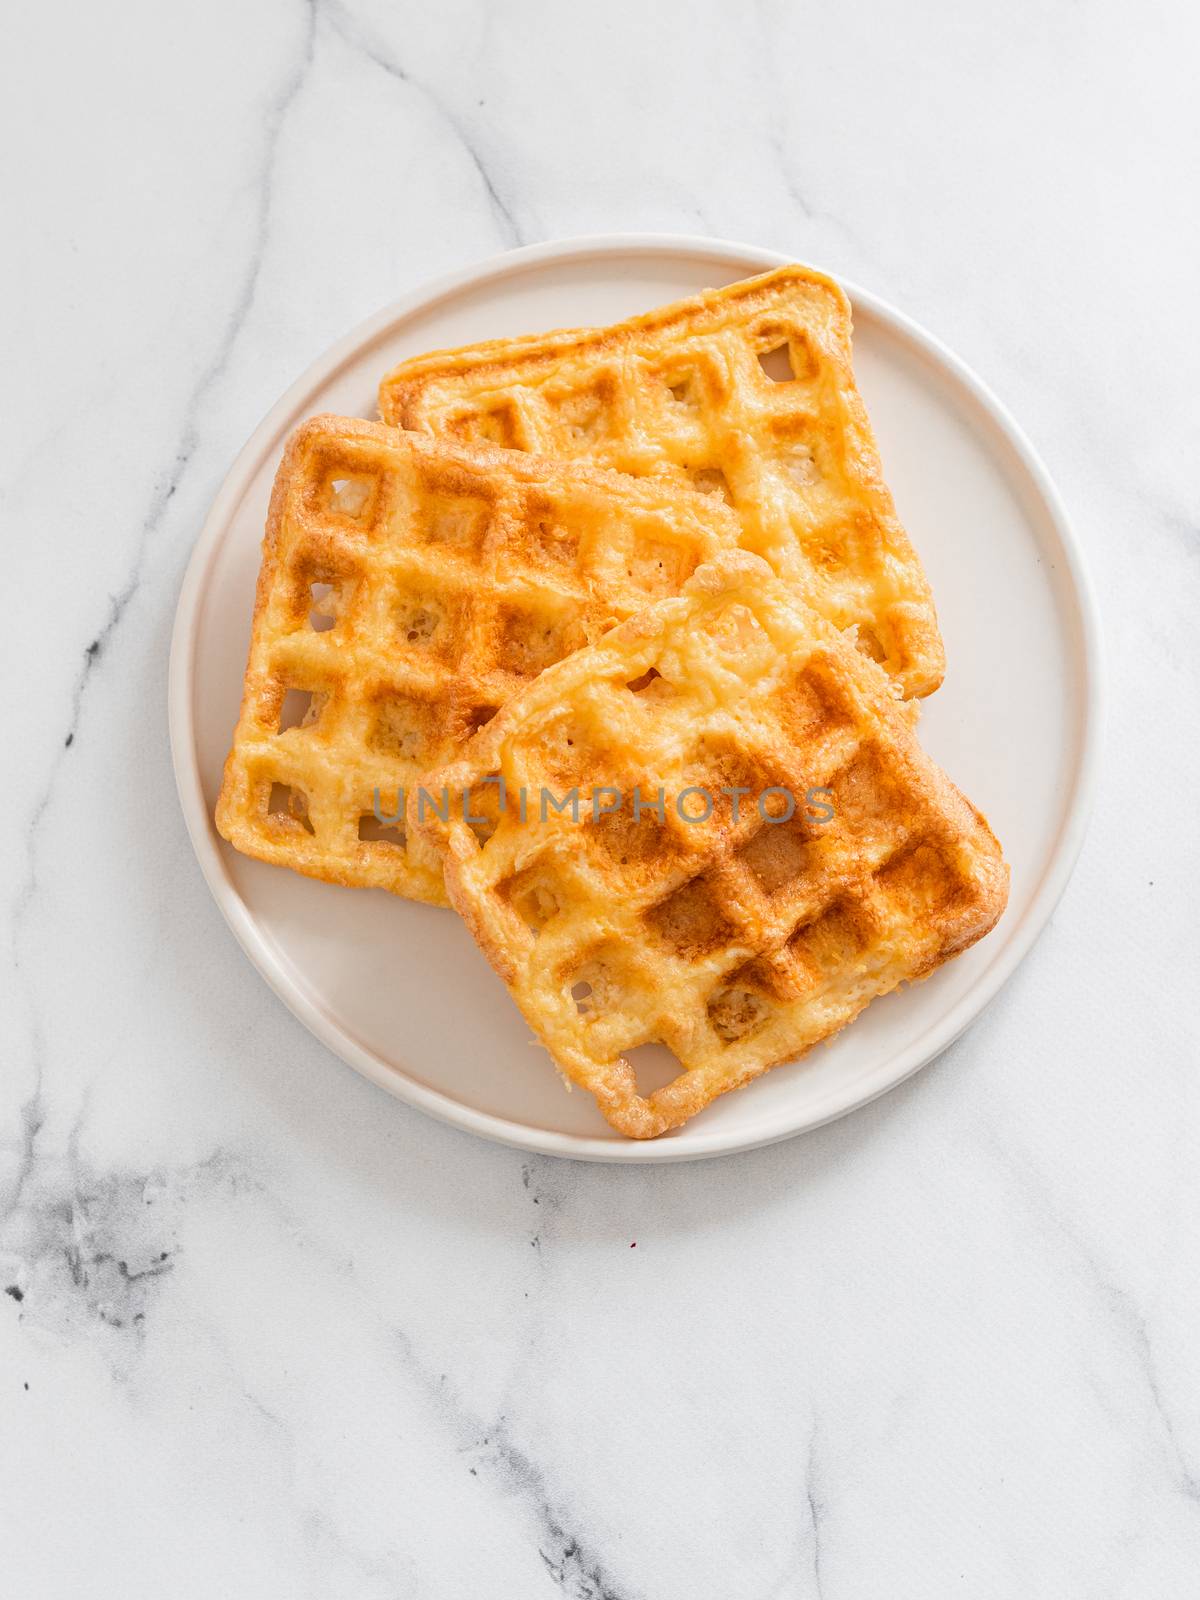 Savory keto two ingredients waffles - chaffles by fascinadora